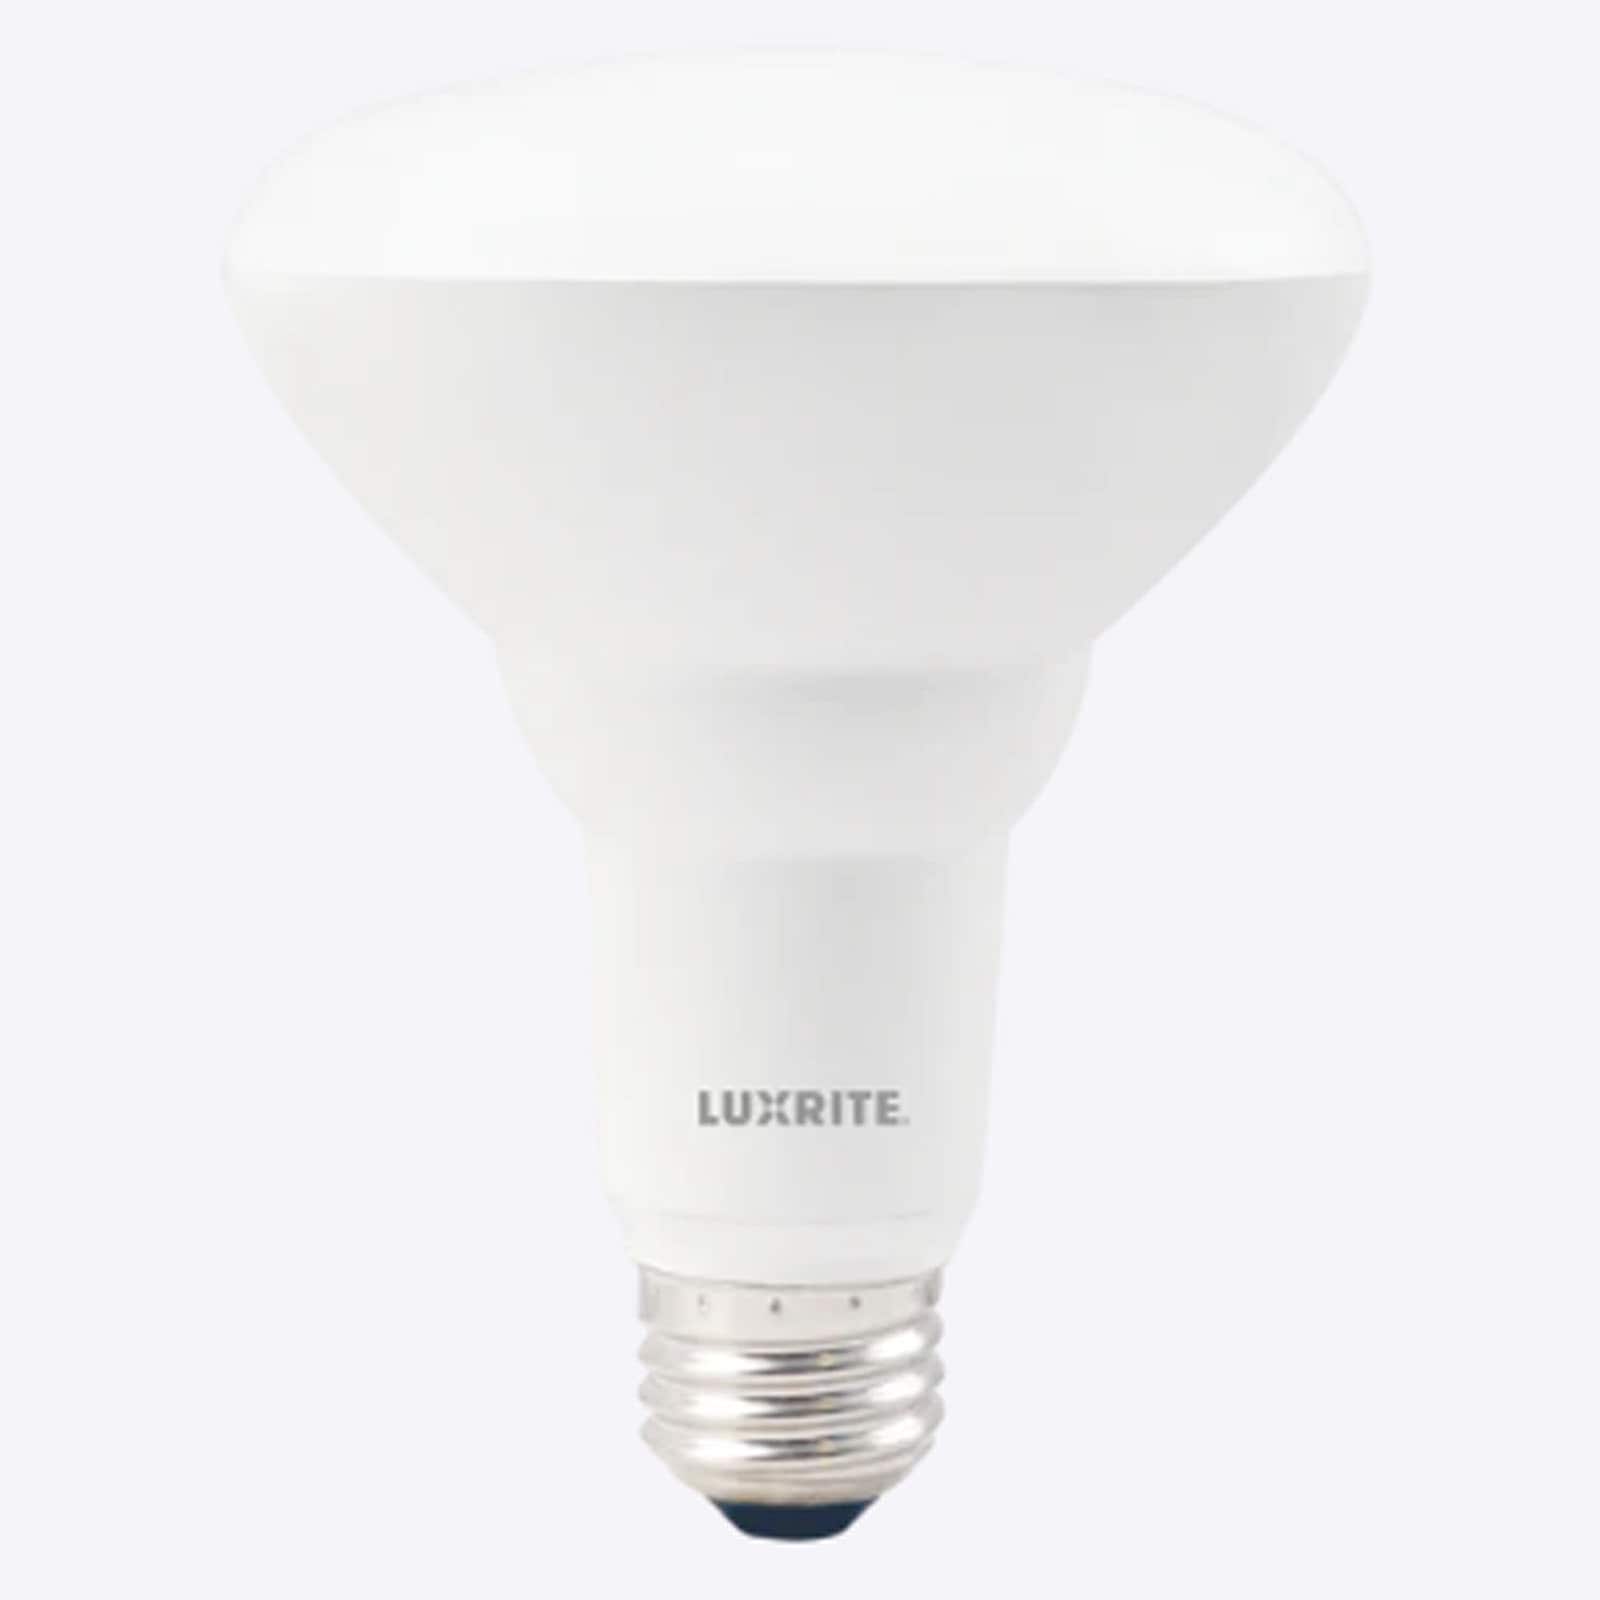 Philips 8.5w LED MR16 Dimmable Warm White Flood 35 deg Bulb